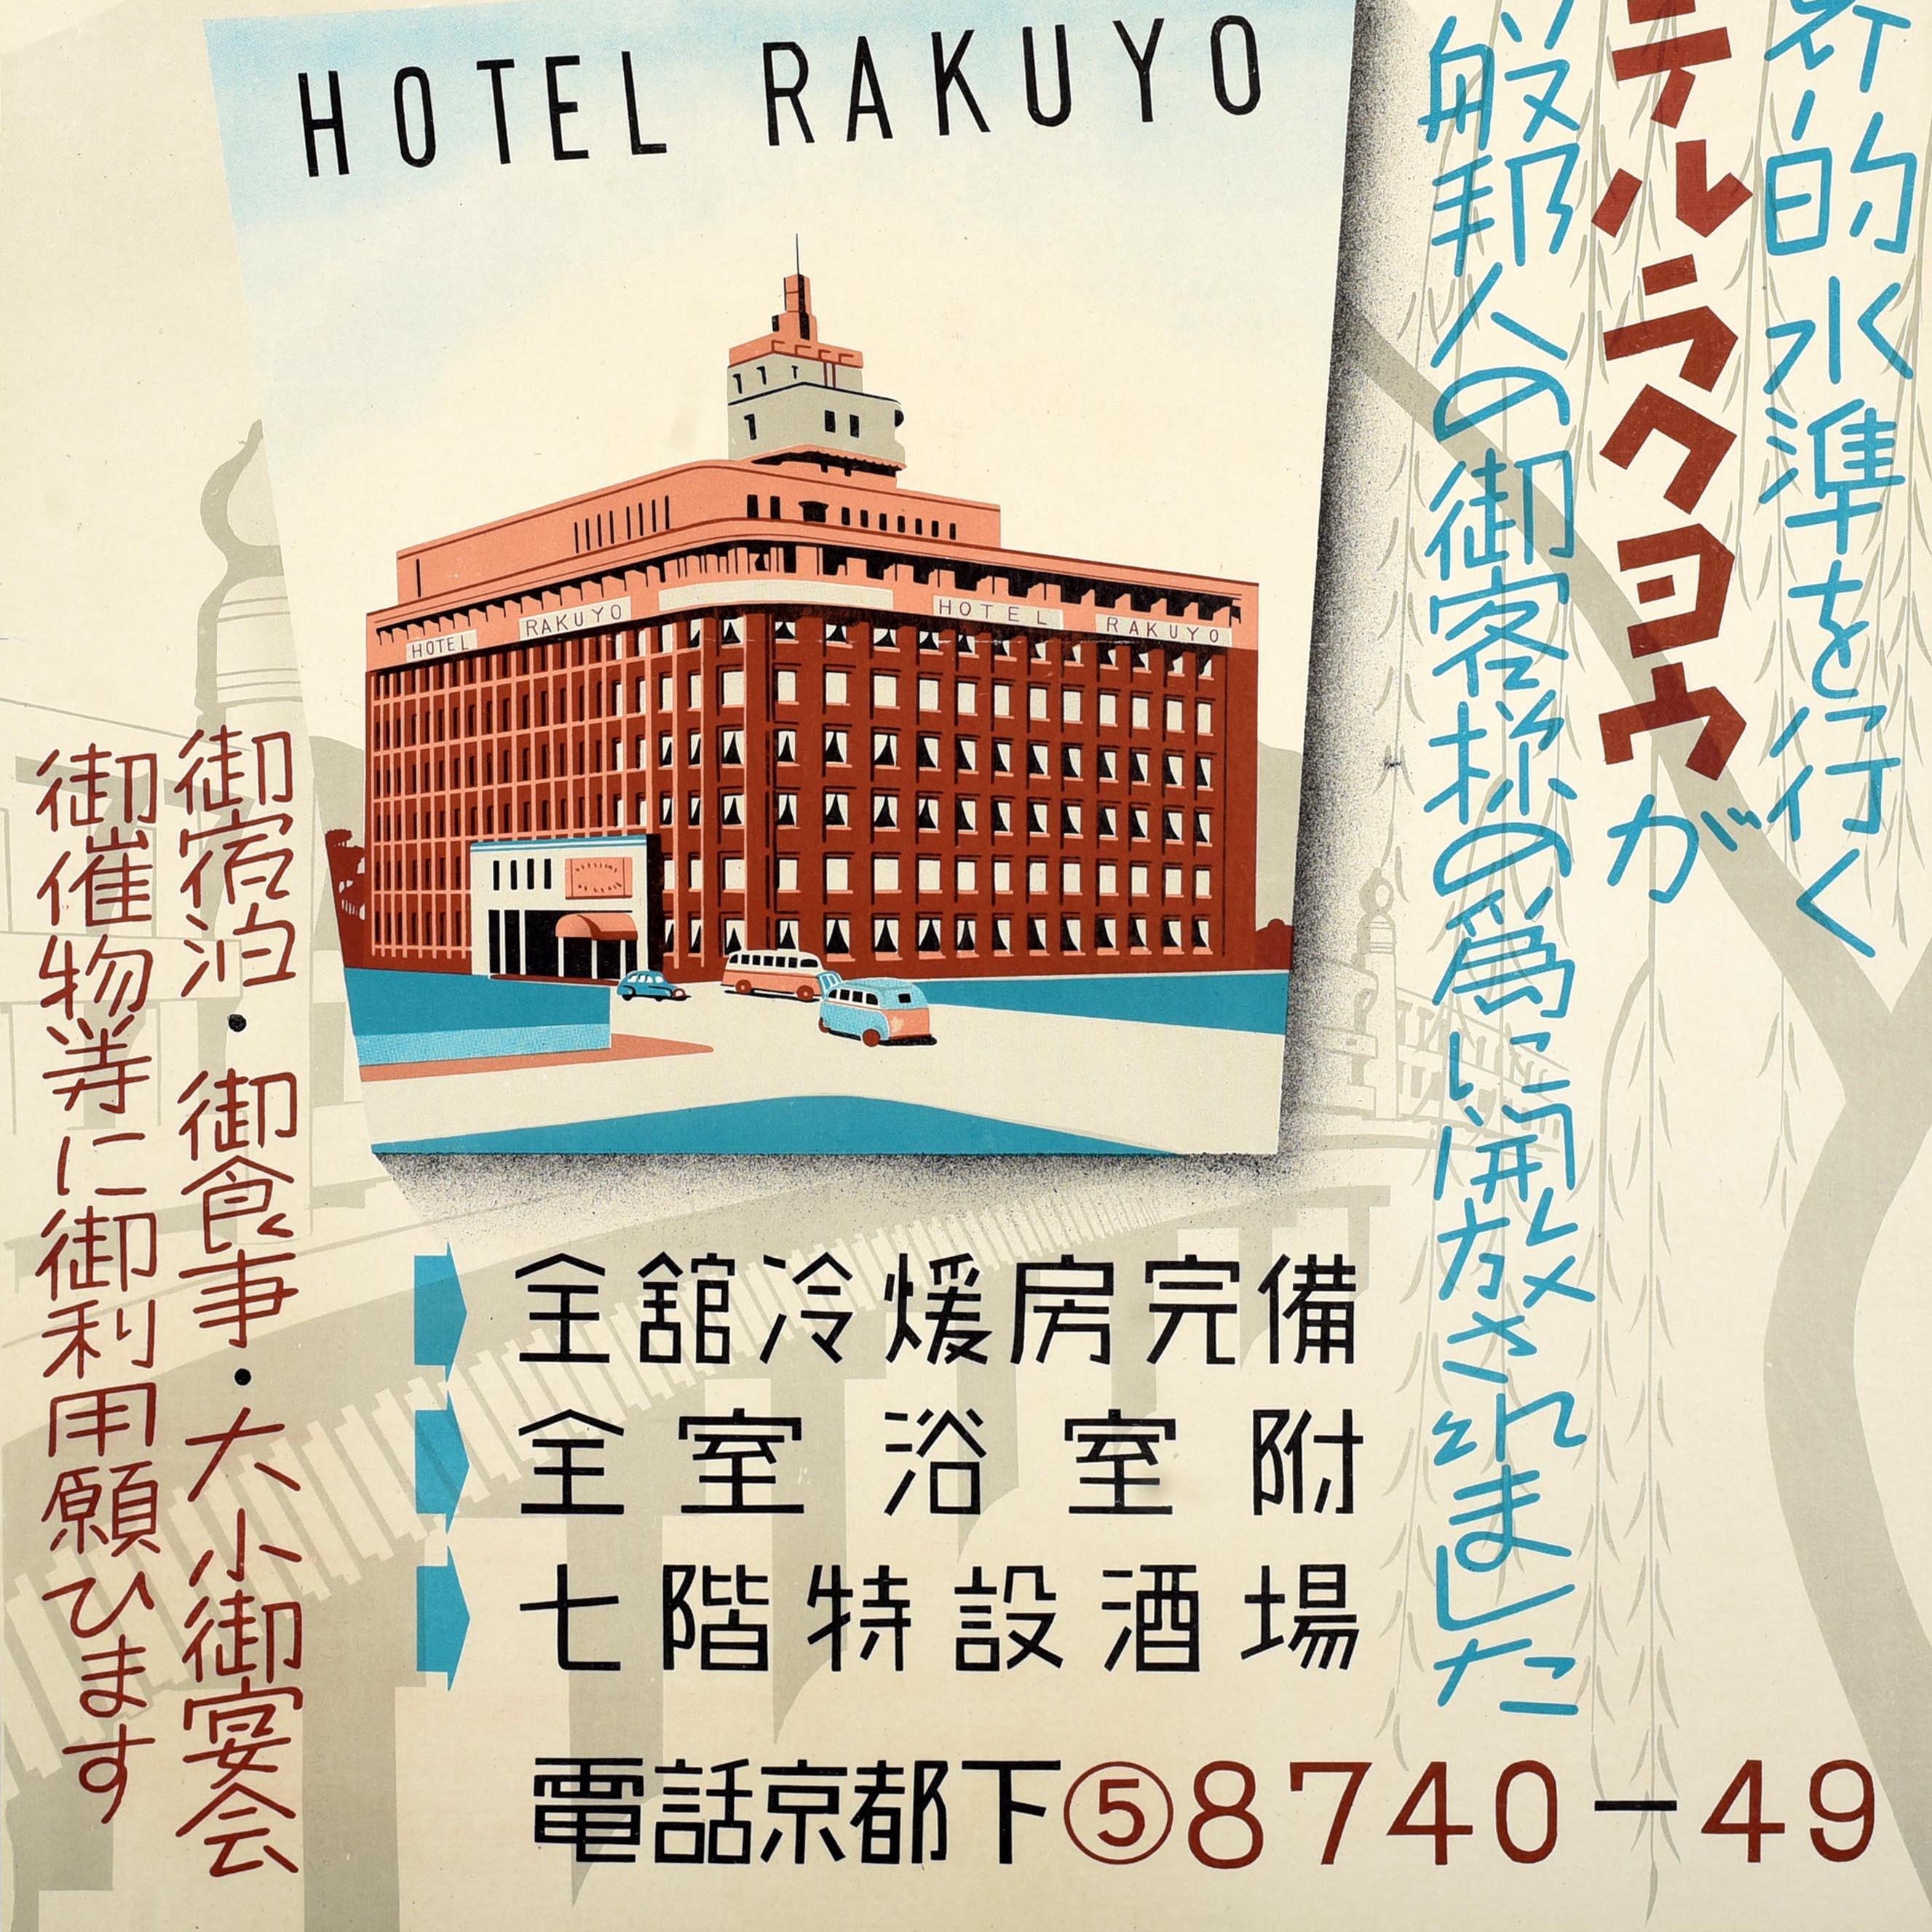 Original Vintage Japanese Travel Poster Hotel Rakuyo Kyoto Station Japan Asia For Sale 1